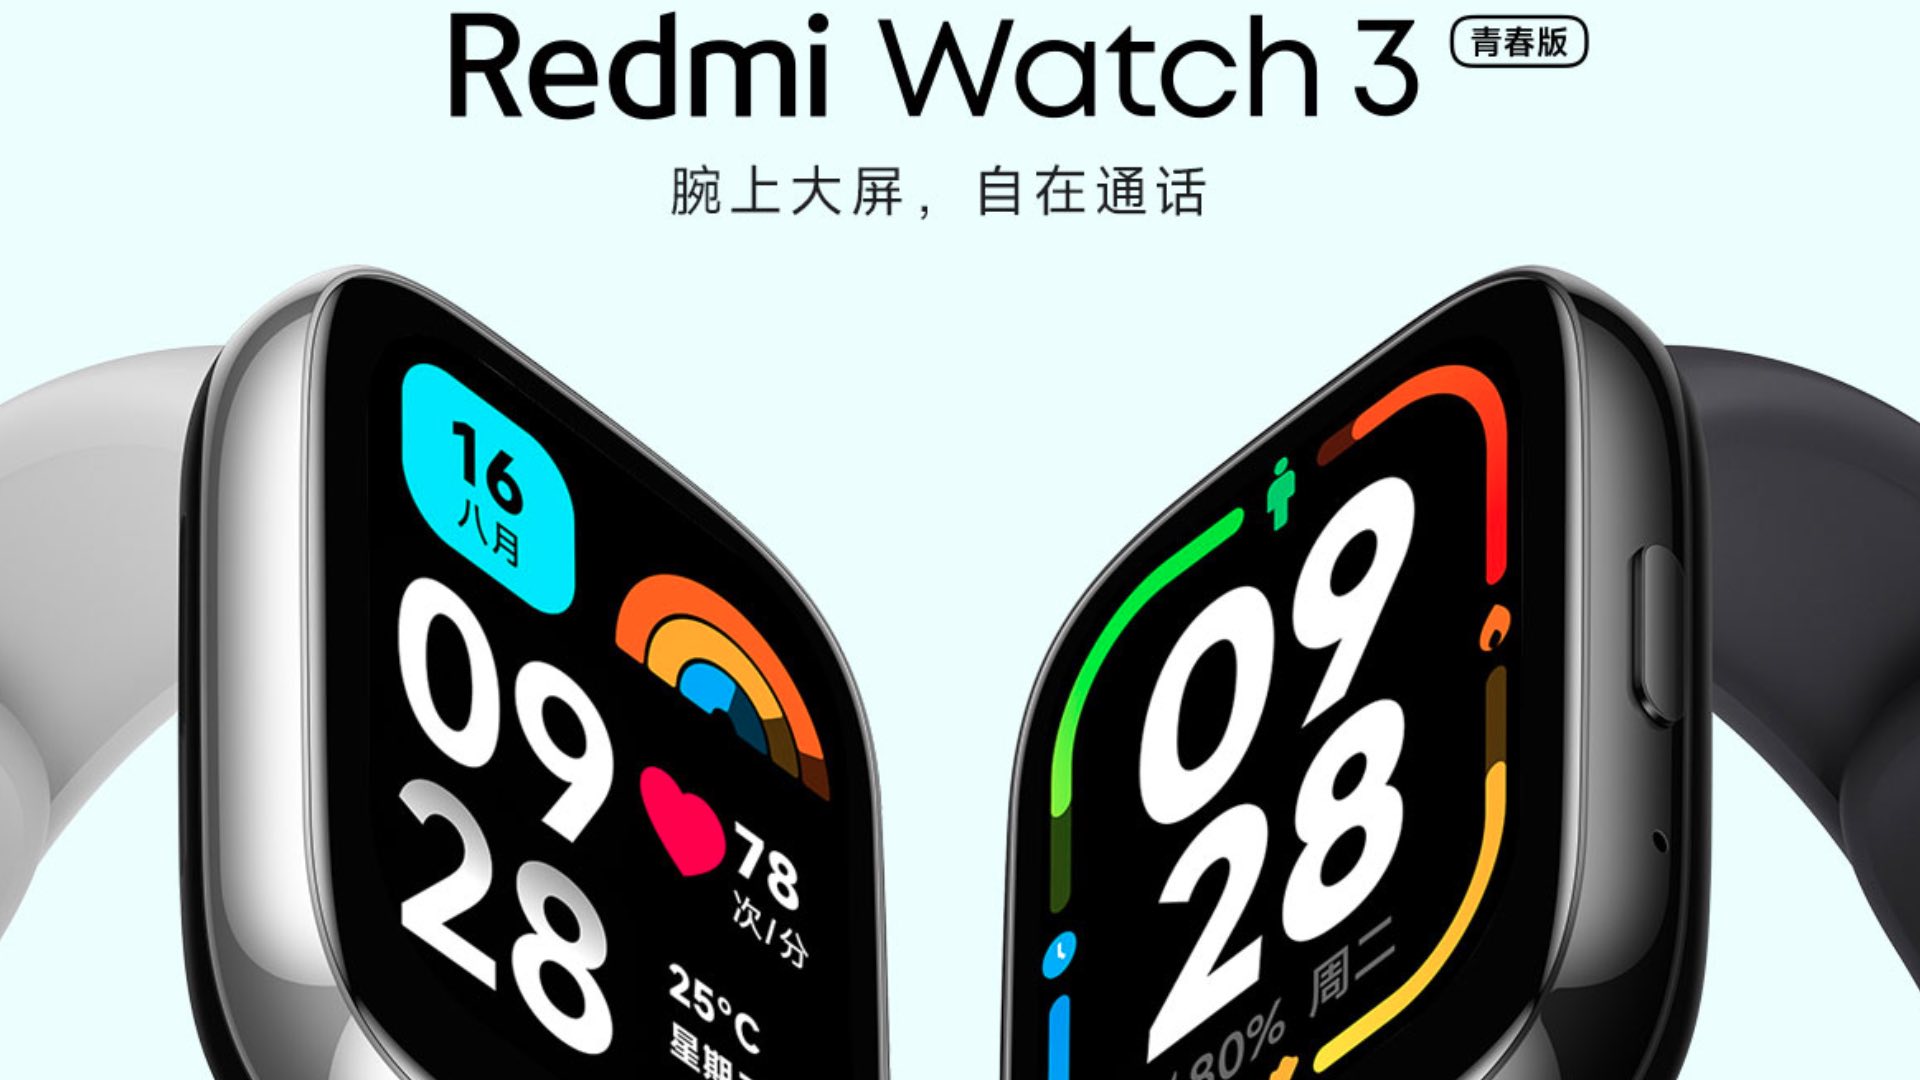 Редми вотч 3. Redmi watch 3. Циферблат для Эппл вотч 3 пицца. Redmi watch 3 Размеры. Redmi watch 3 сравнение